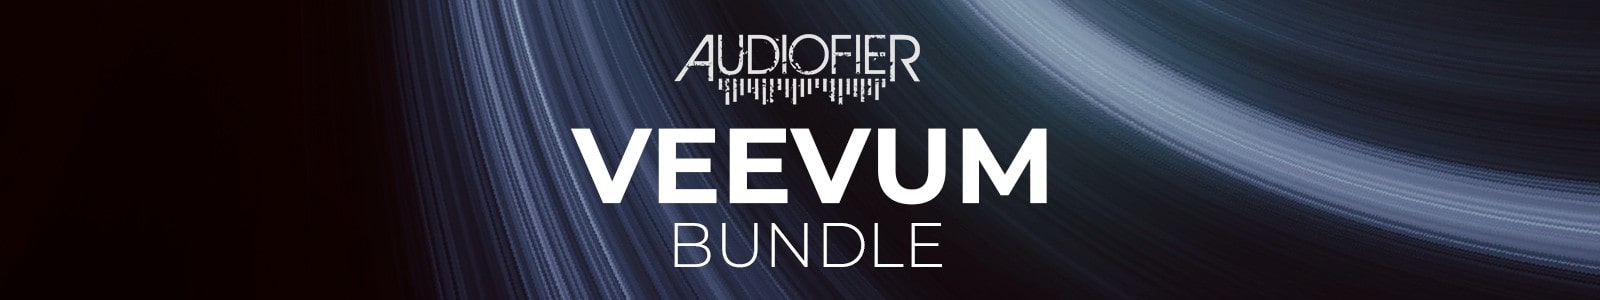 audiofier veevum bundle